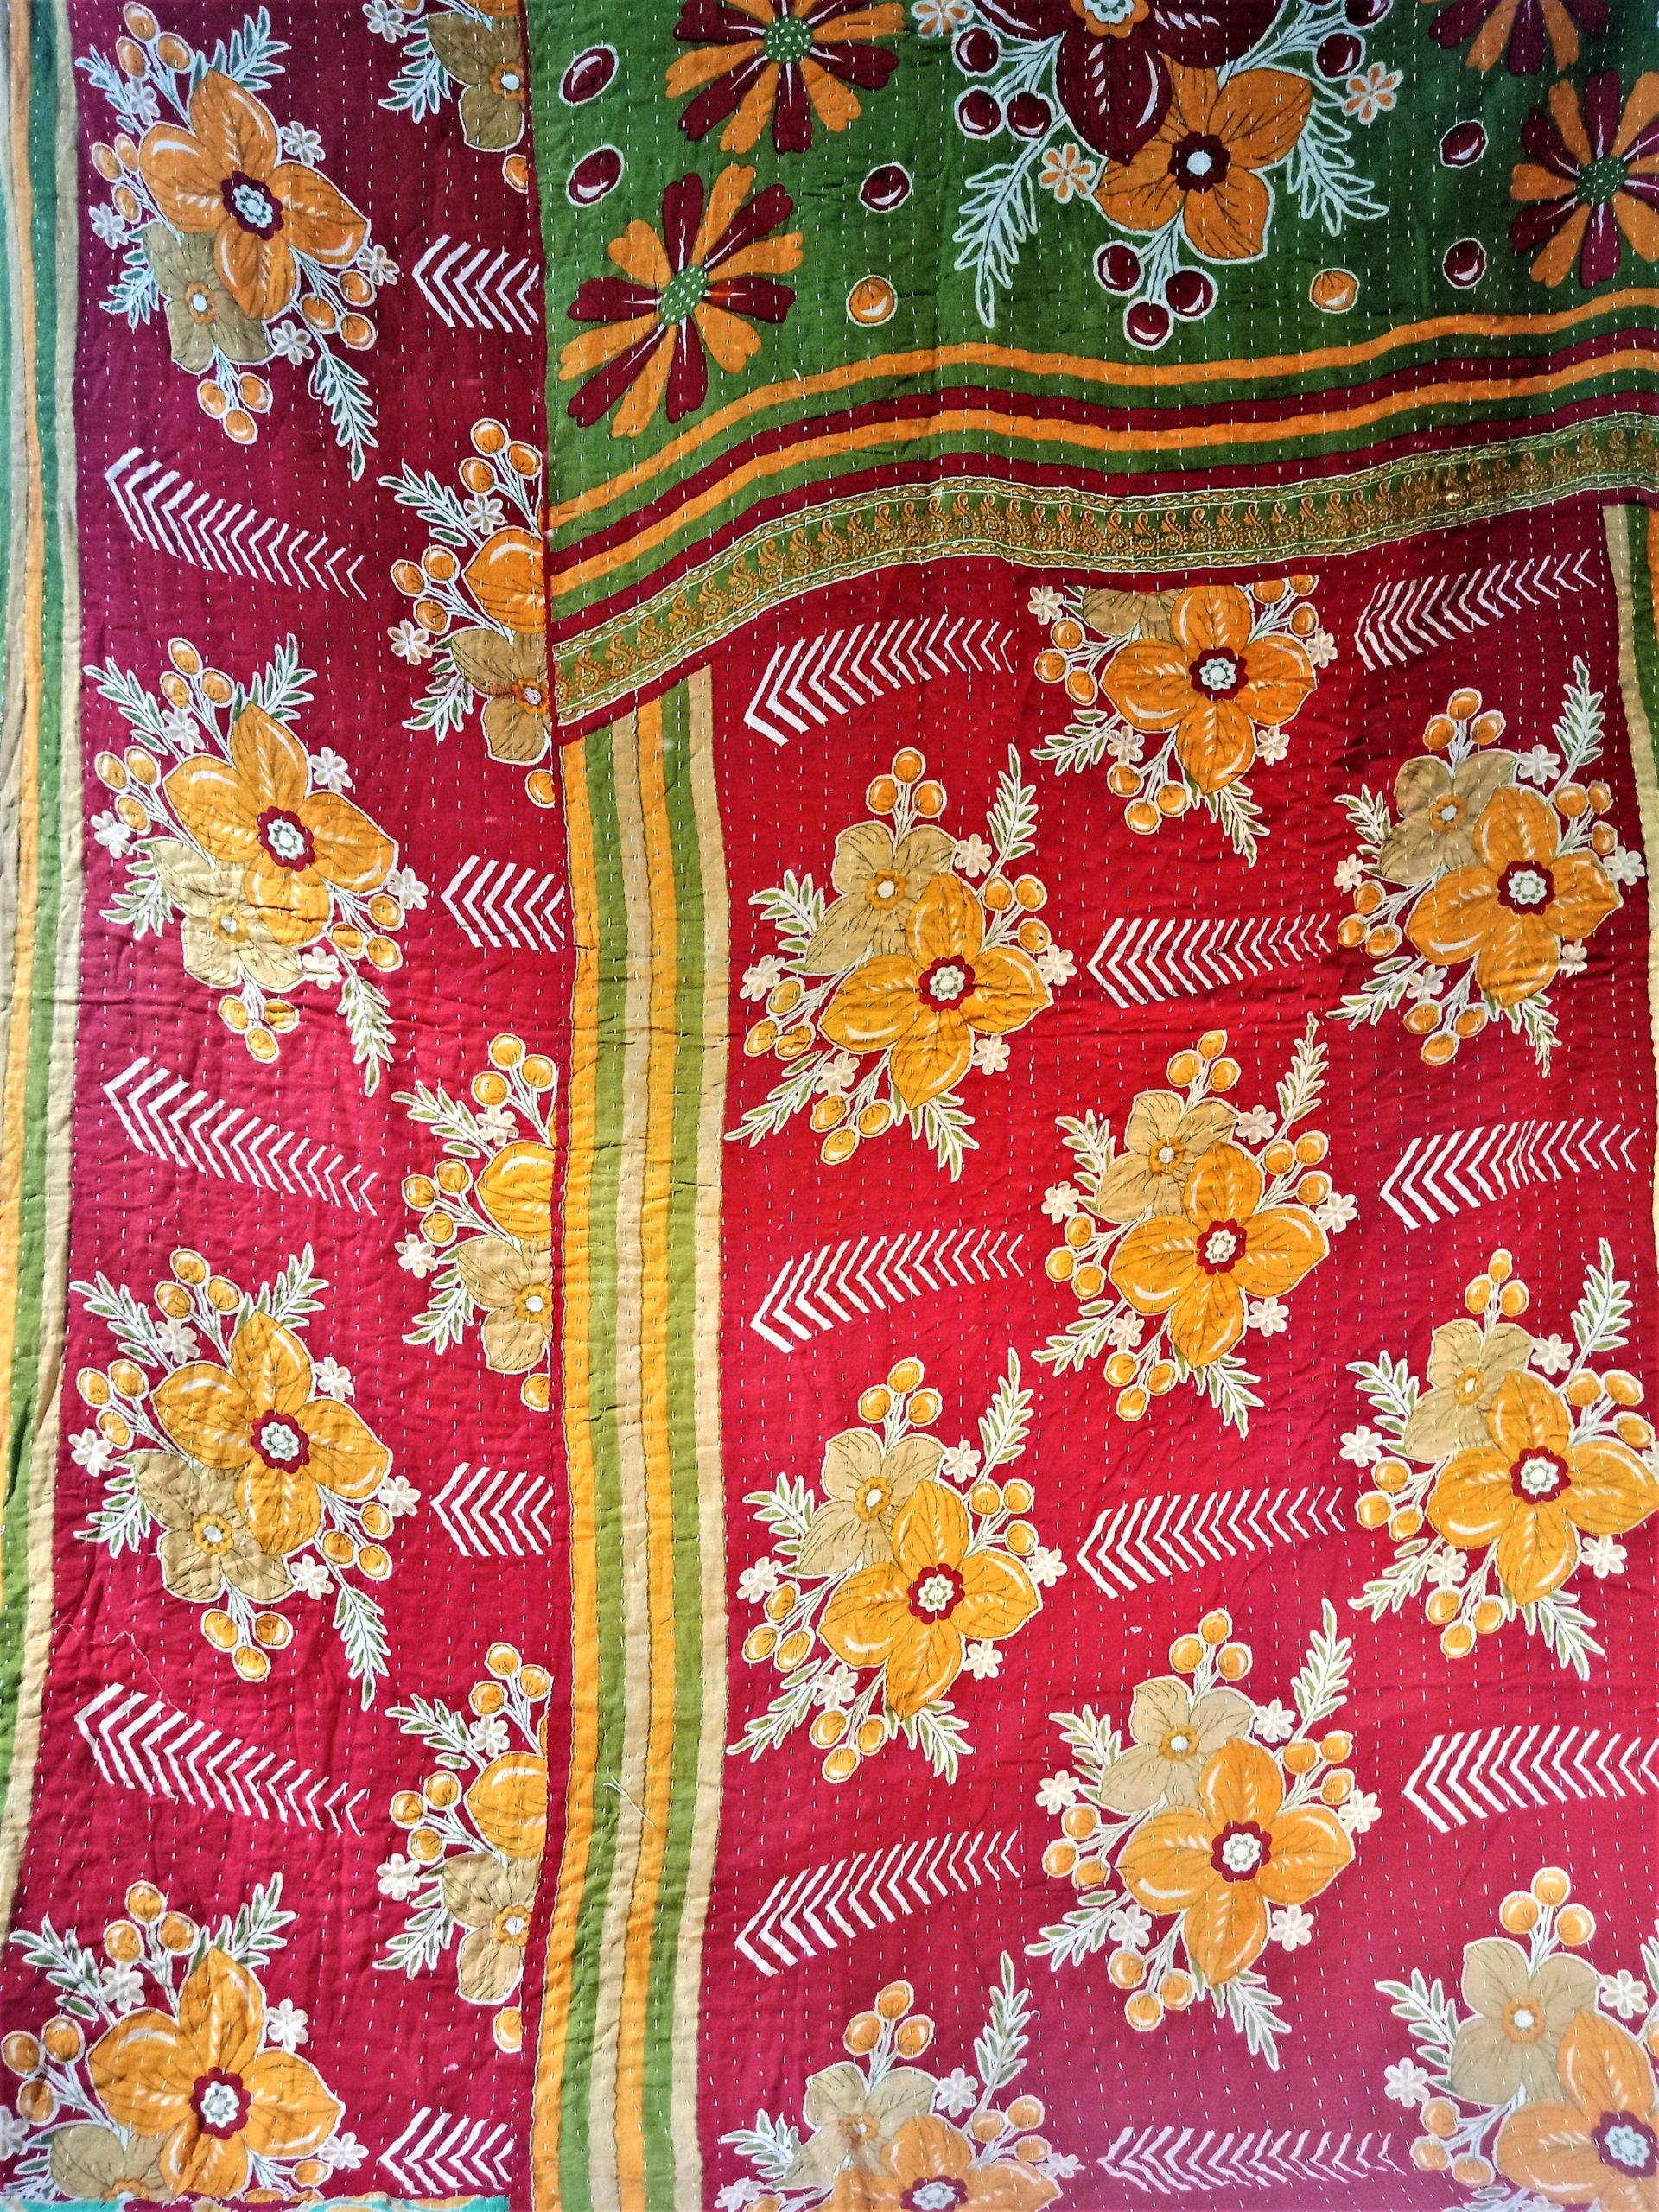 Kantha Quilt designed by artisan Mira - Vintage Kantha Quilts, Throw ...